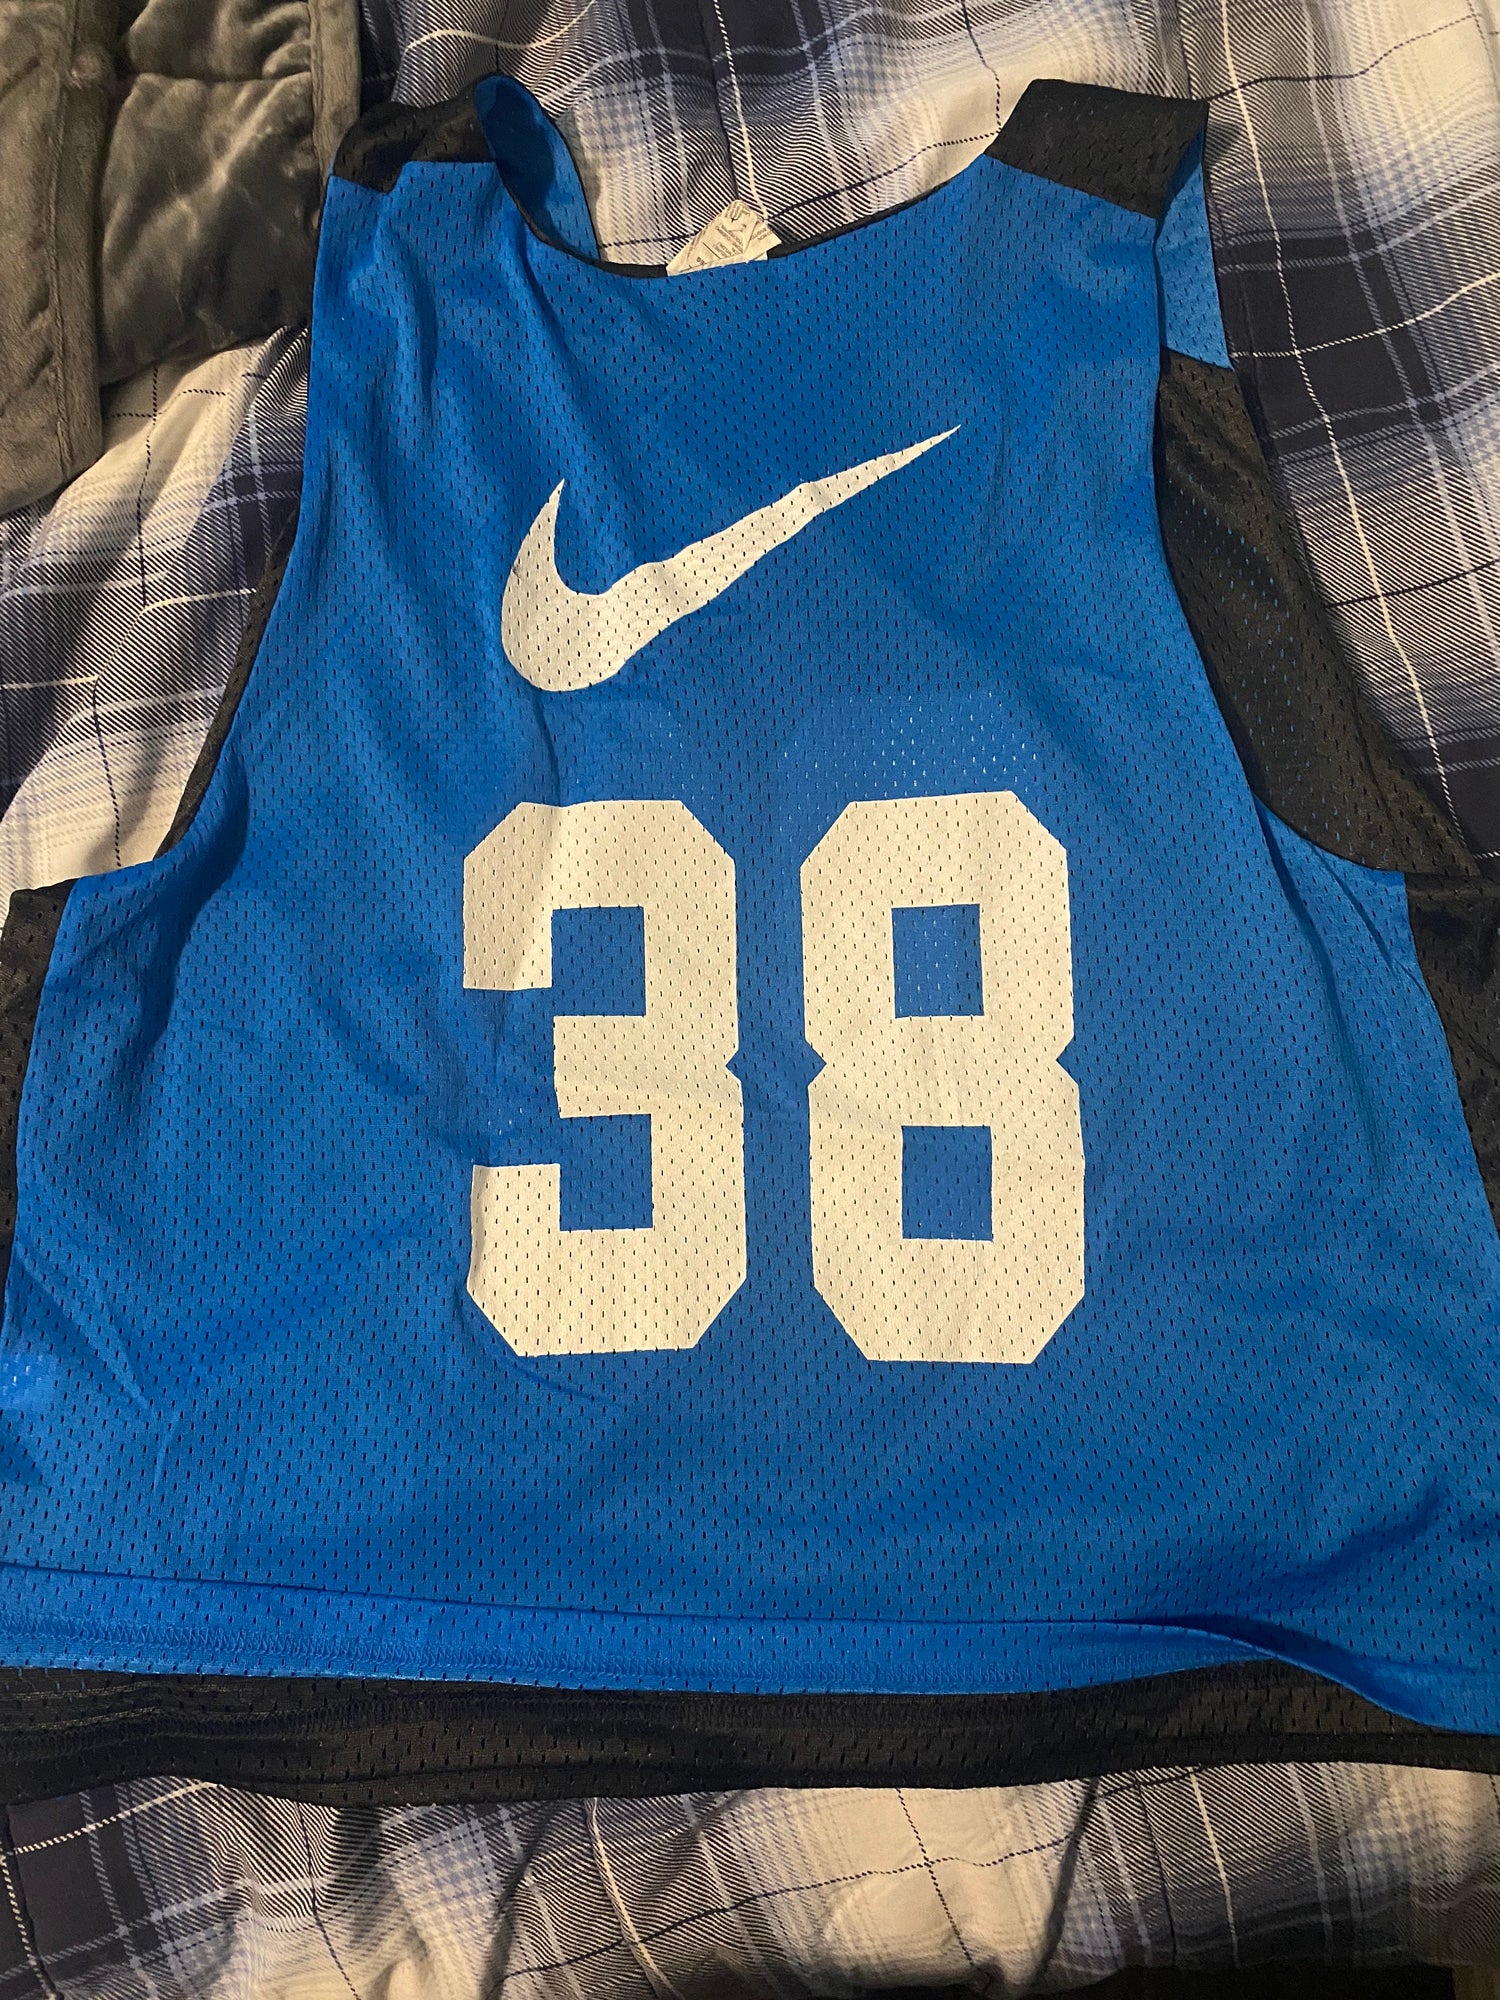 Nike, Shirts, Nike Fiba 3x3 Mens Reversible Basketball Jersey 3